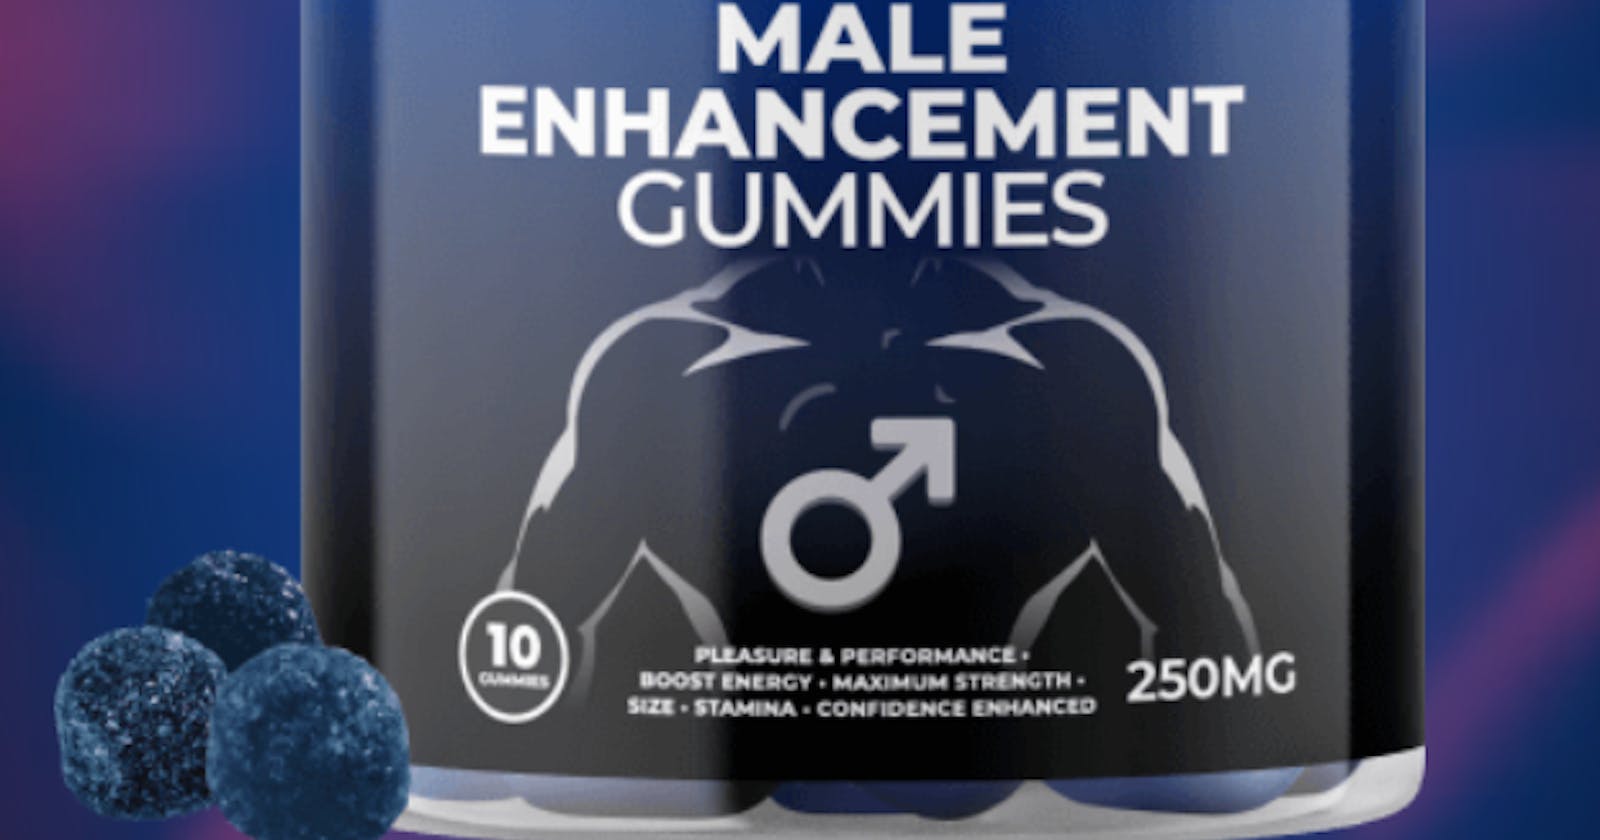 CBD Gummies For Male Enhancement Amazon?